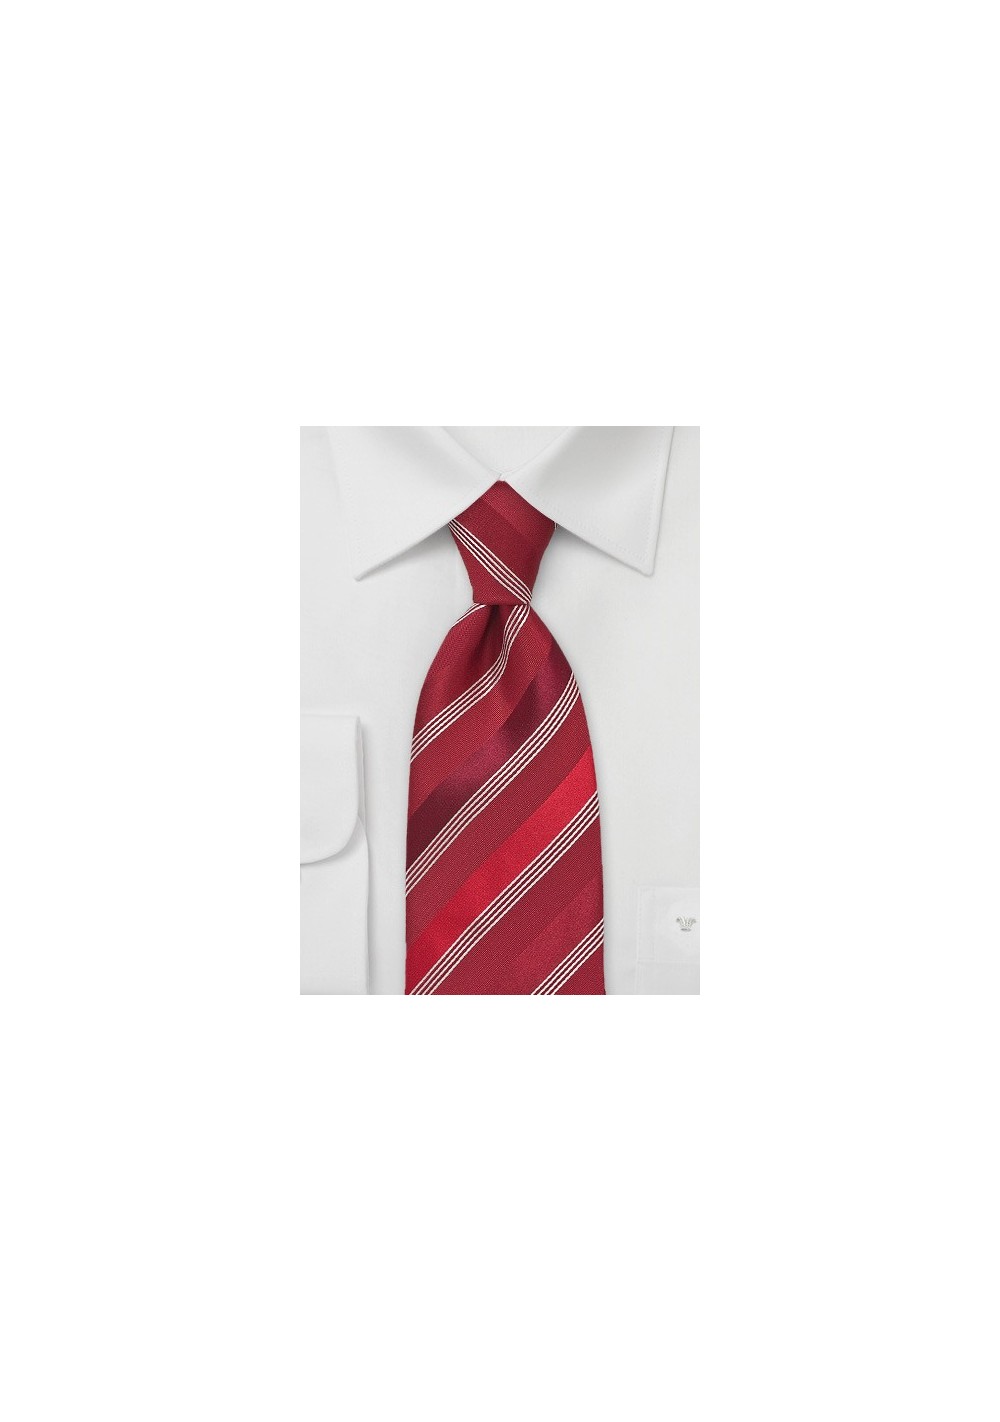 Tonal Red Striped Tie